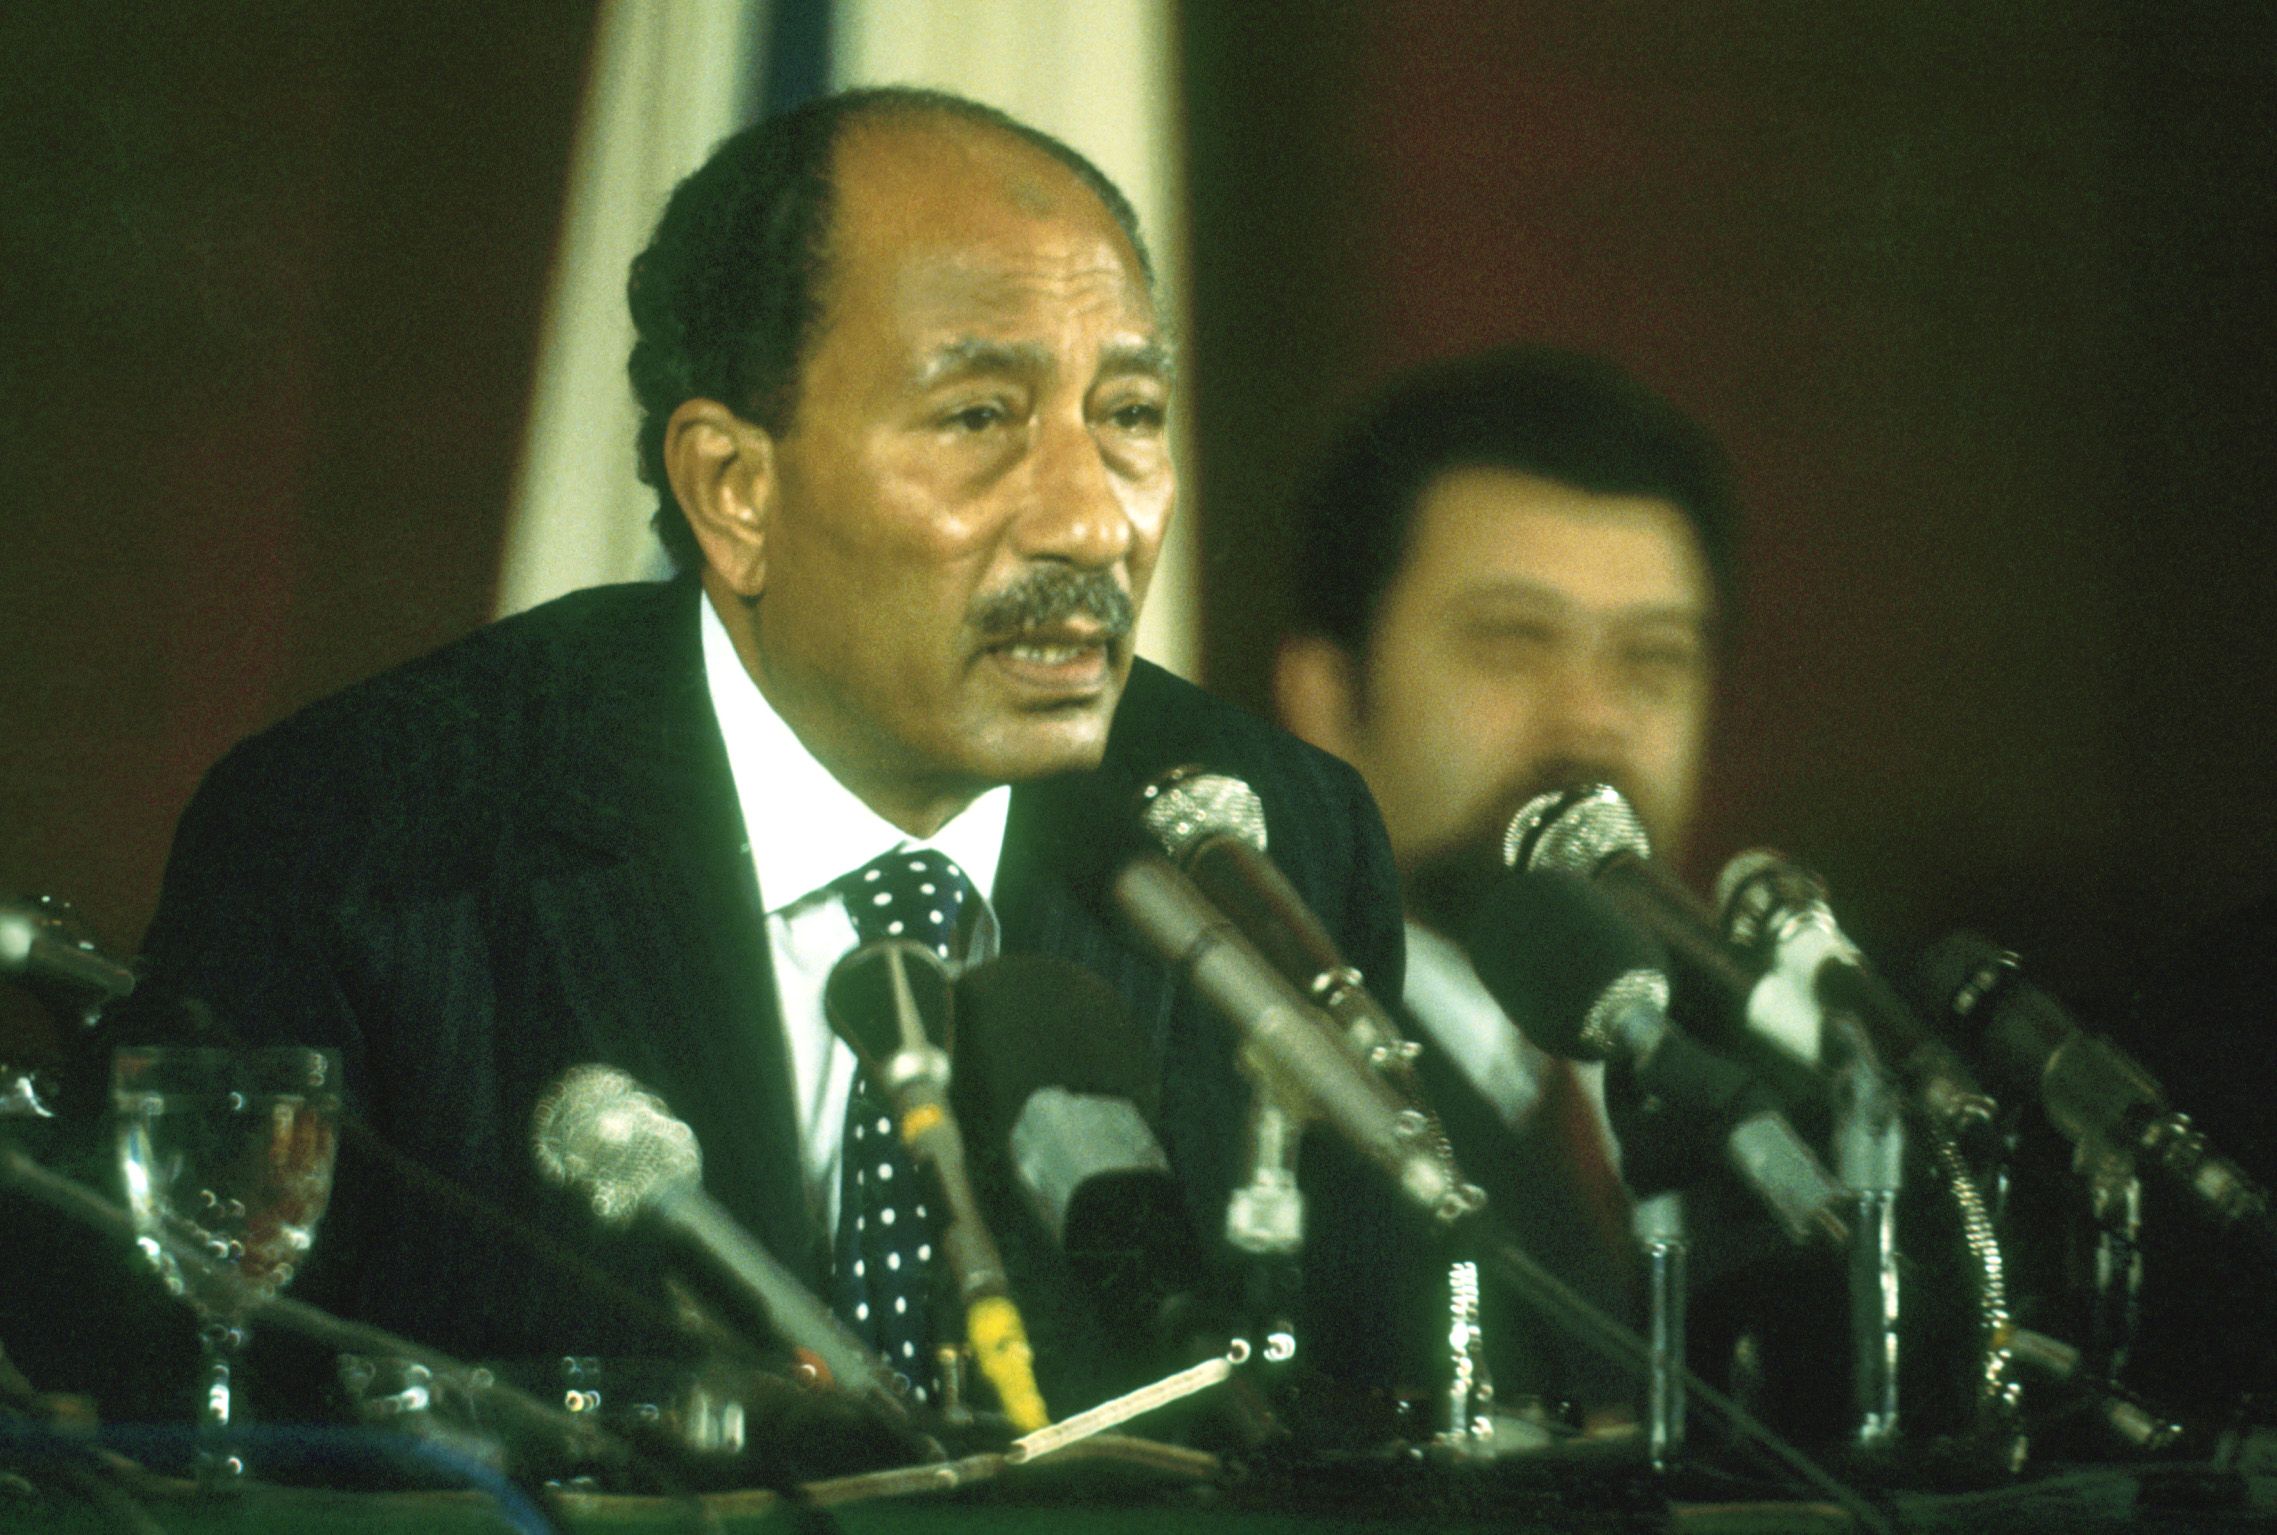 Anwar Sadat, 1918-1981